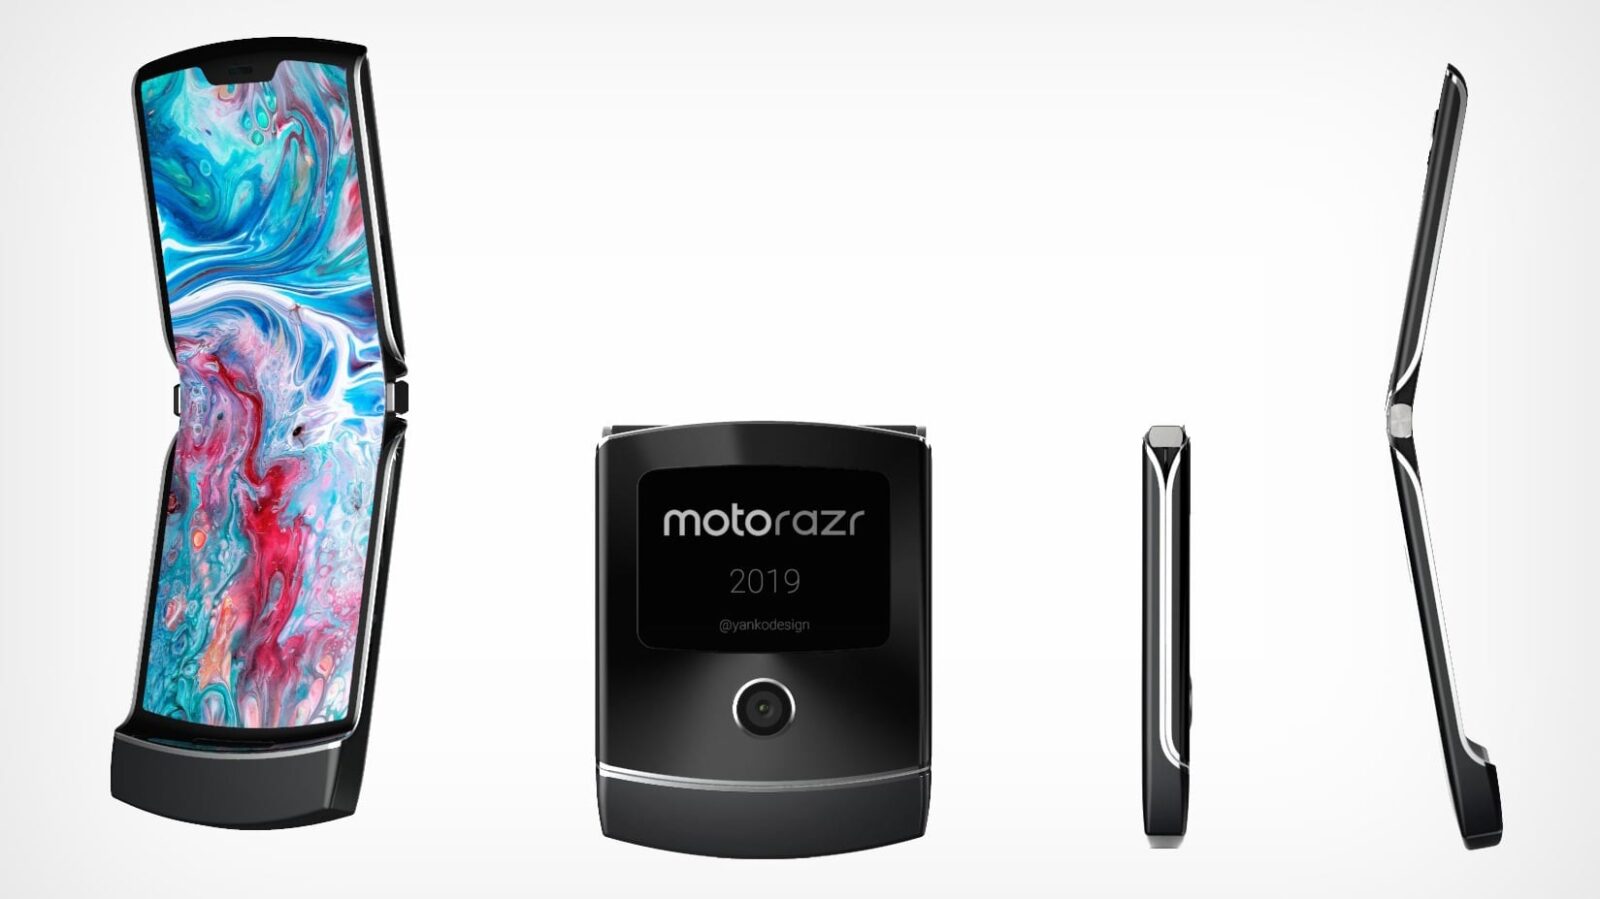 Motorola Razr 2019: Specs, Price, Release Date